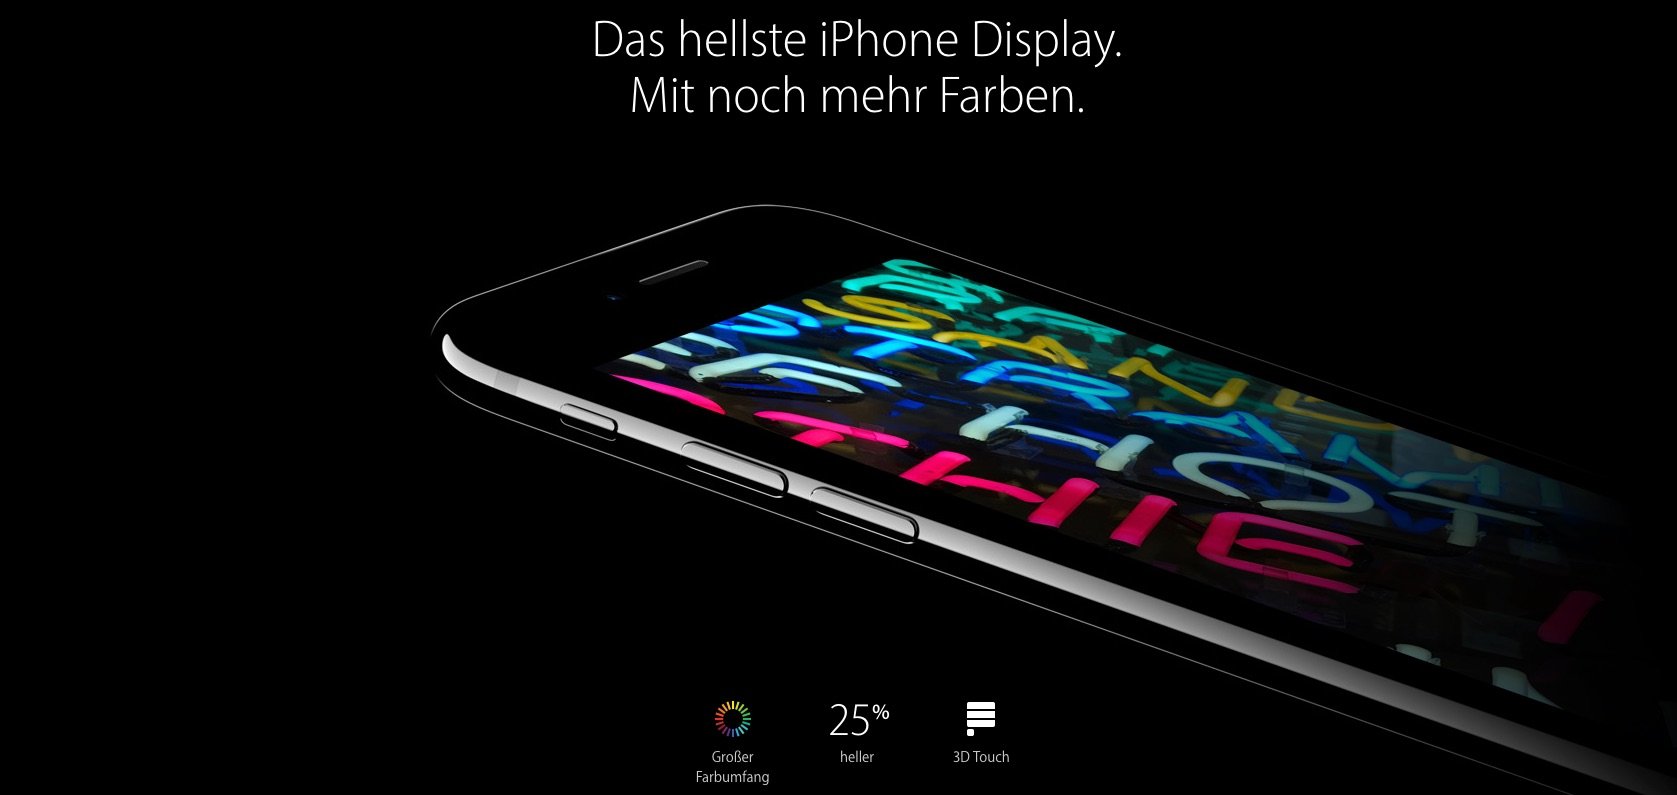 iPhone 7 im Display-Test: iPhone 7 bricht Smartphone Display Rekorde 6